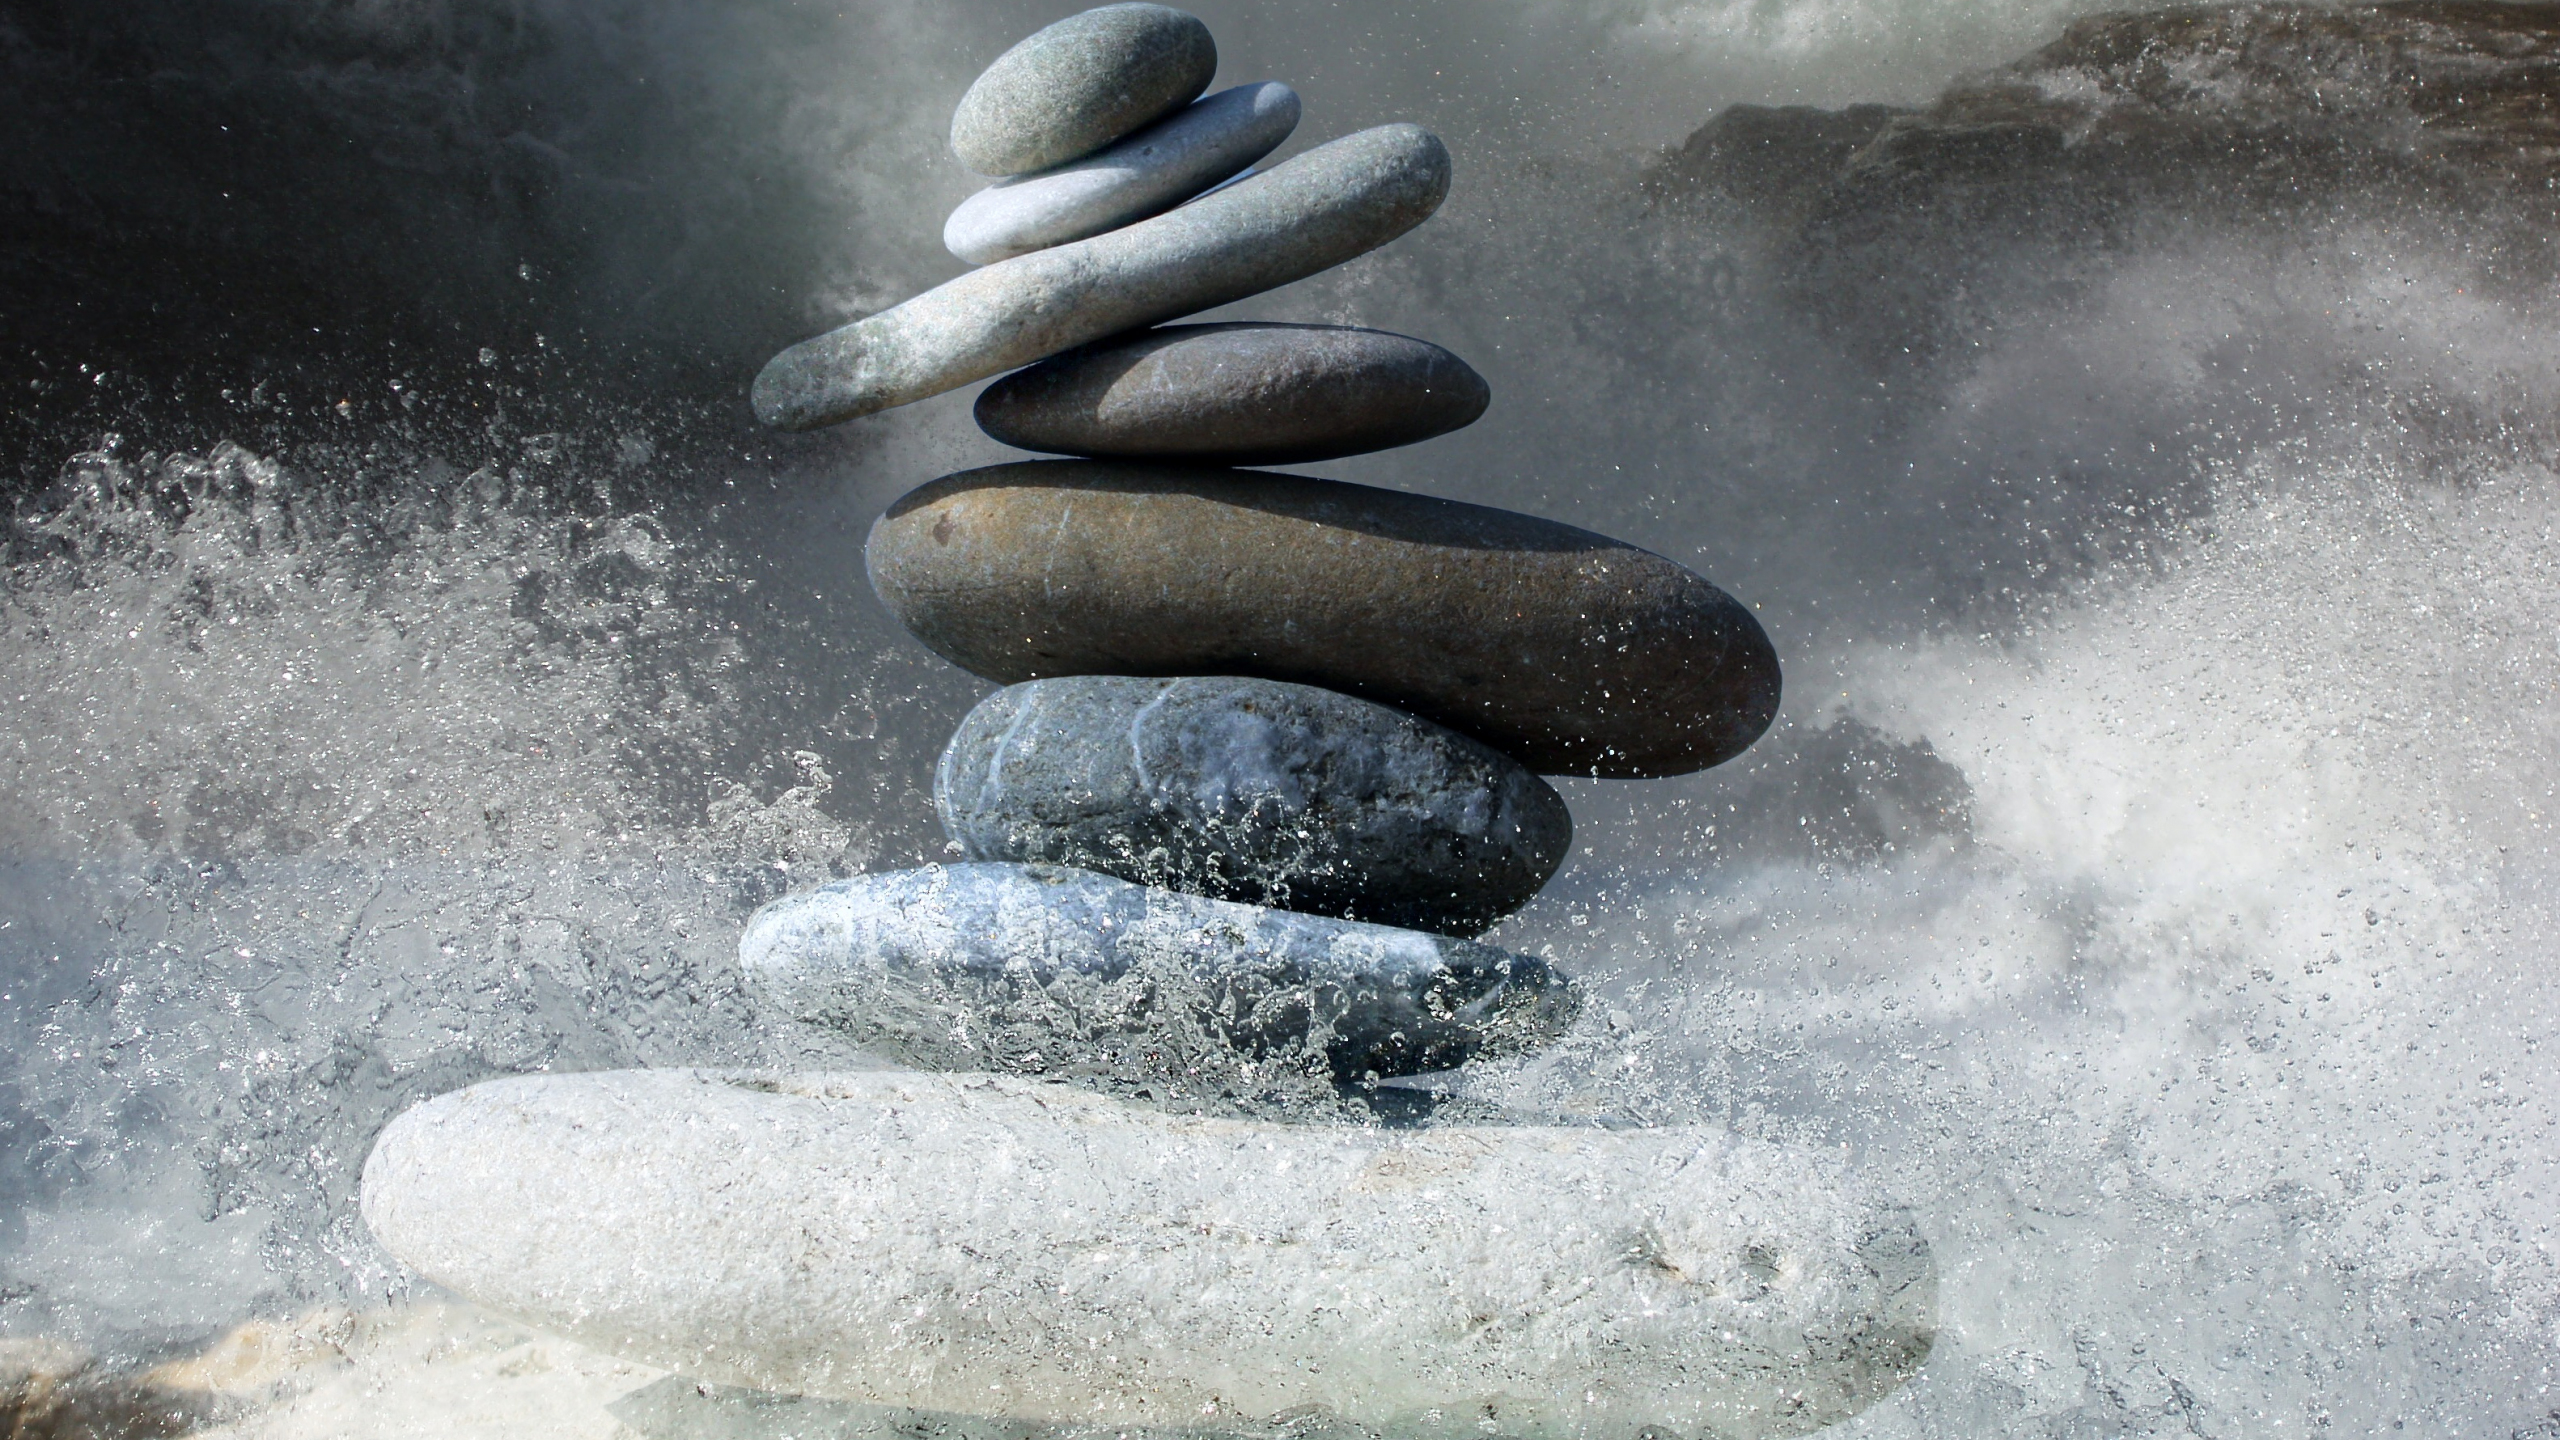 Desktop Wallpaper Zen Stones Balance Water Splashes Hd Image Picture Background b072